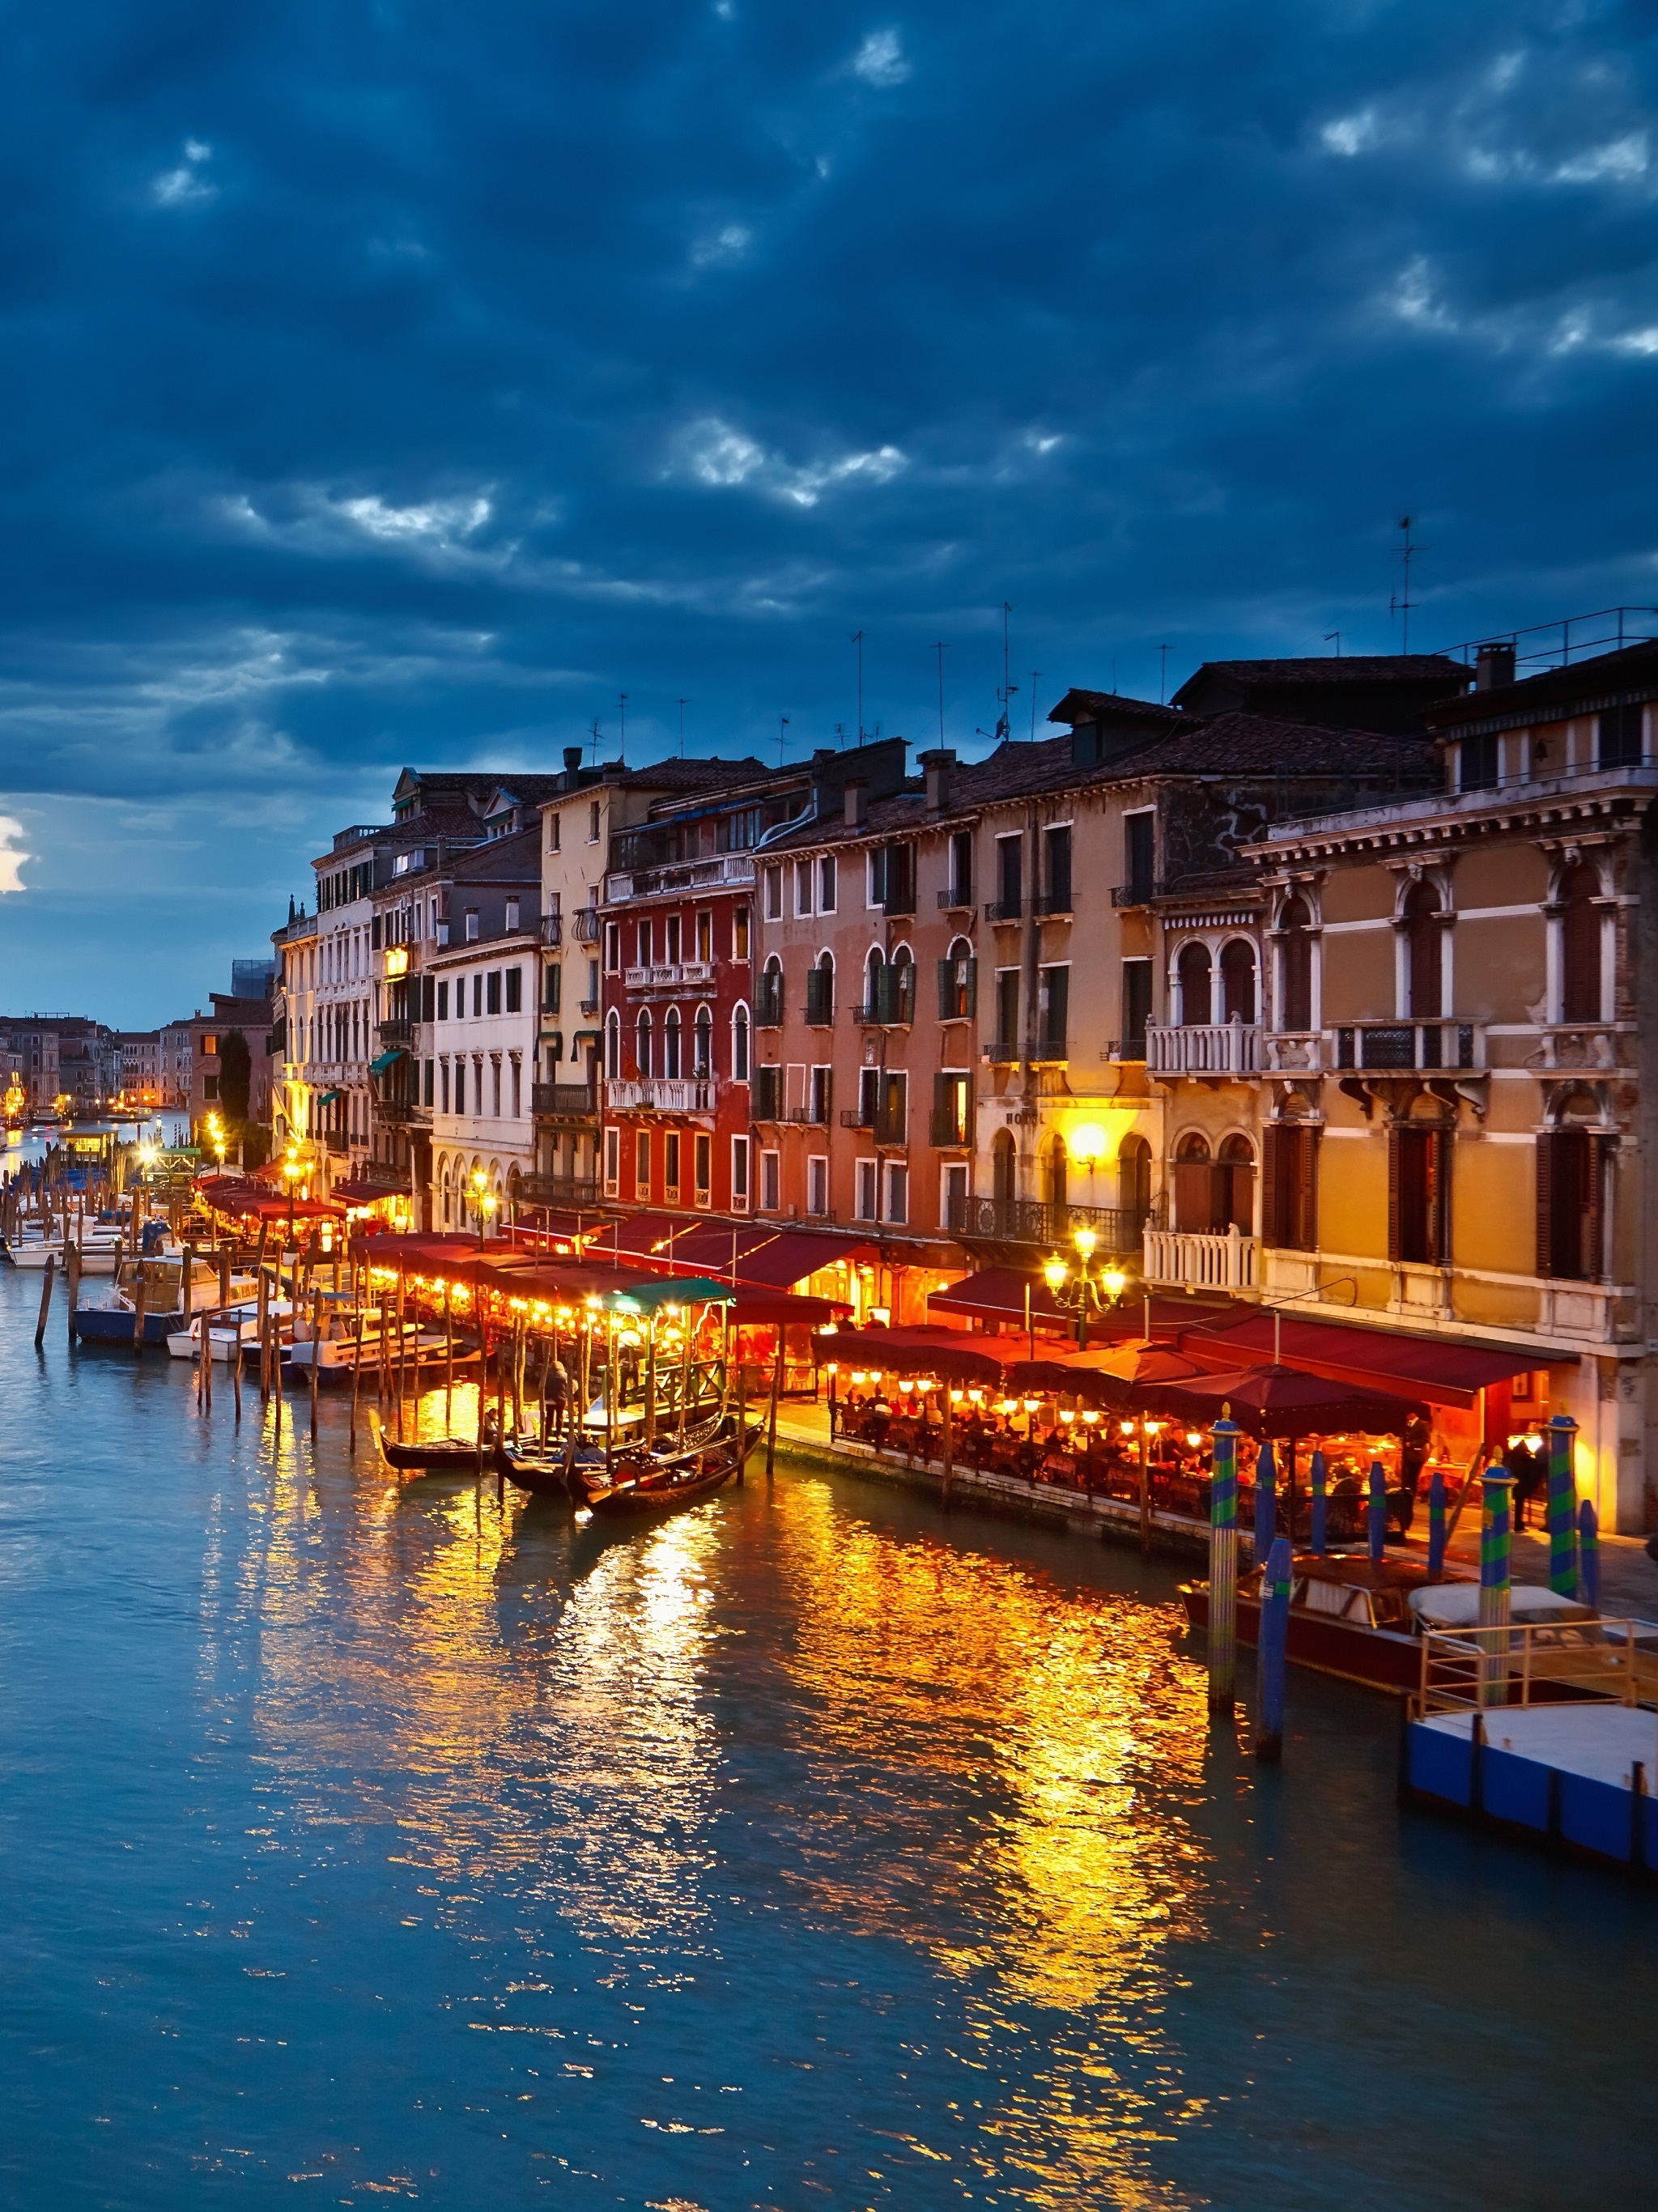 Venice Italy for Apple iPad Pro resolution